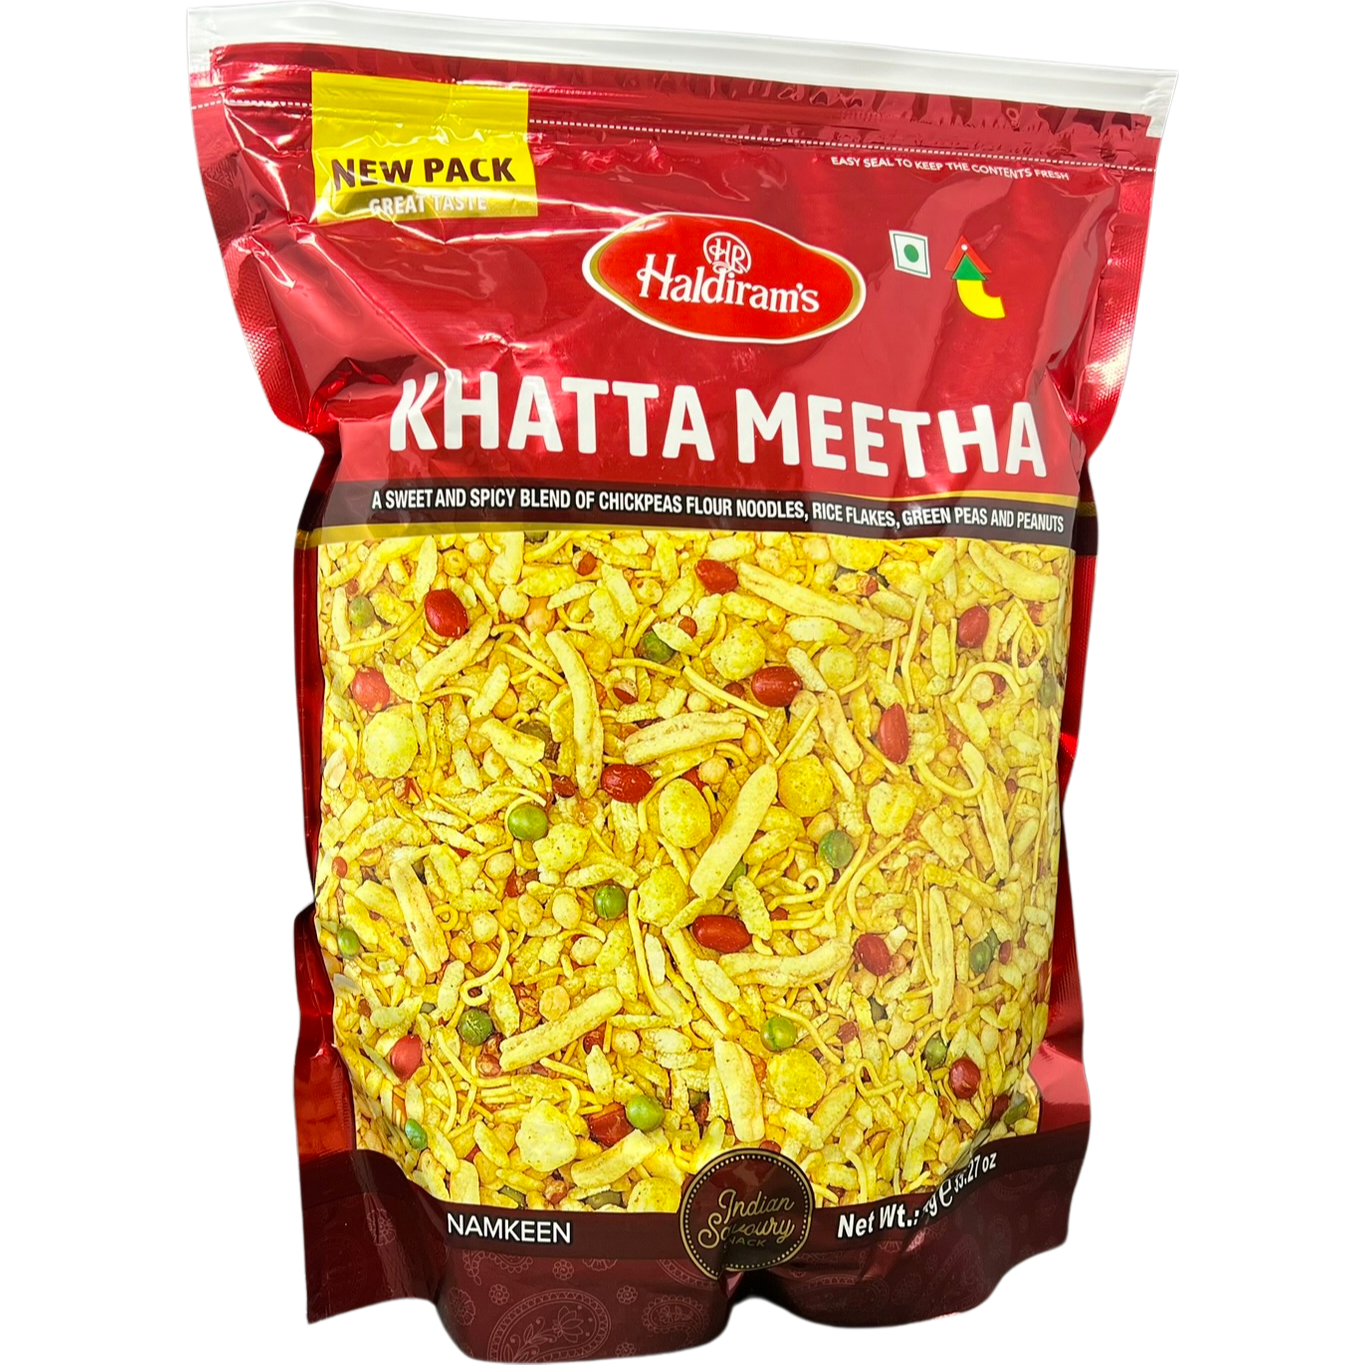 Haldiram's Khatta Meetha - 1 Kg (2.2 Lb)